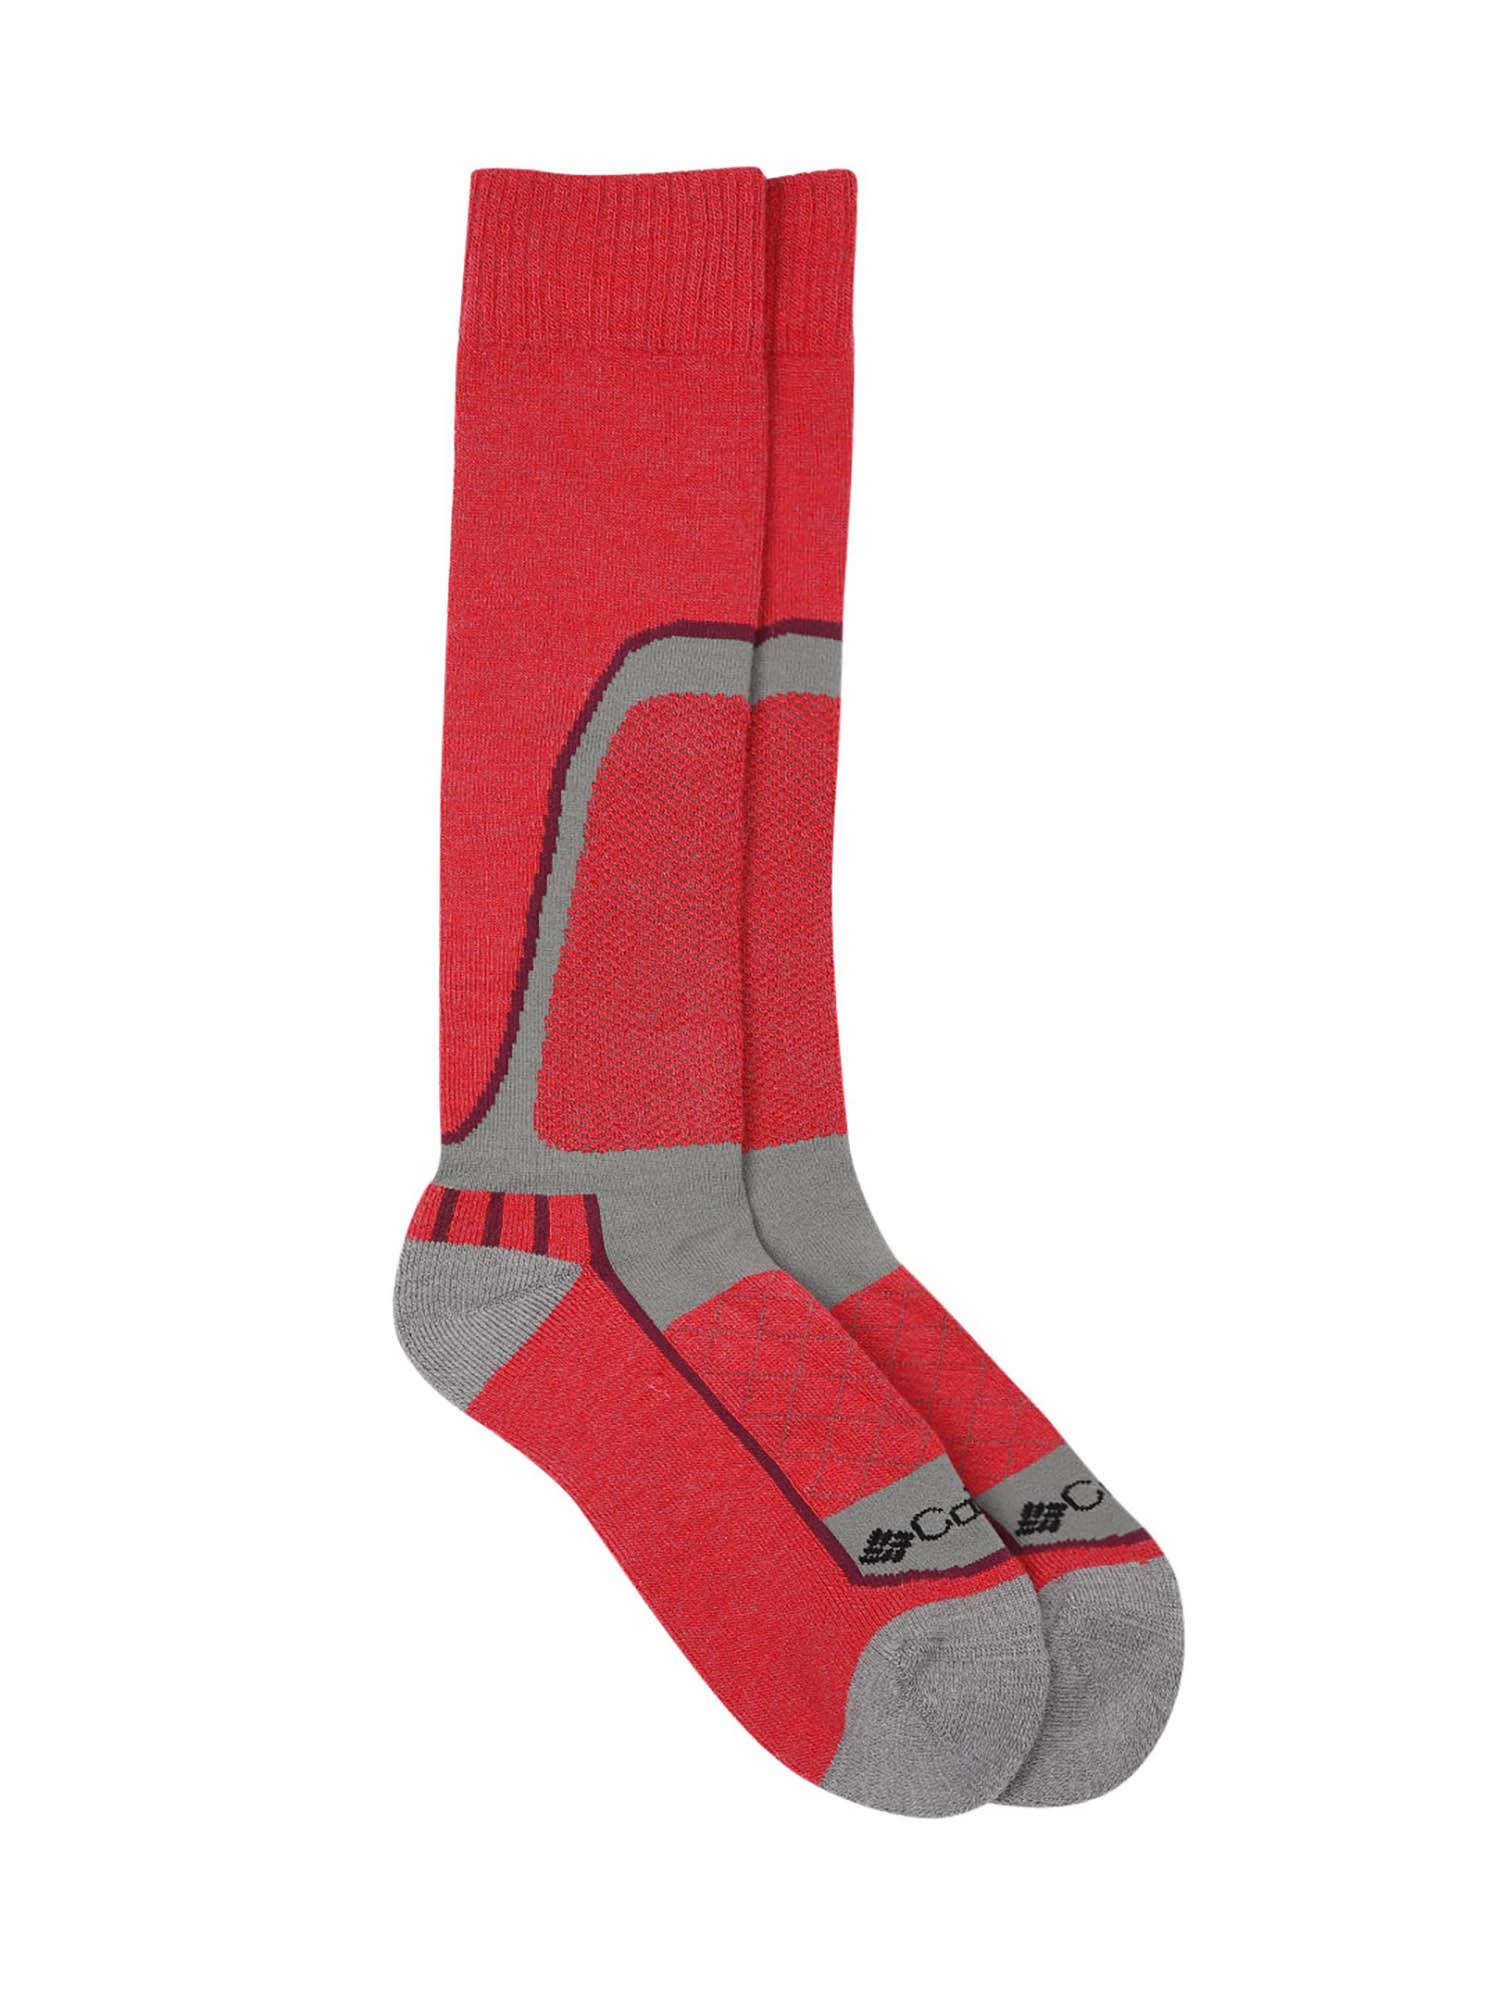 unisex red color blended fabric socks